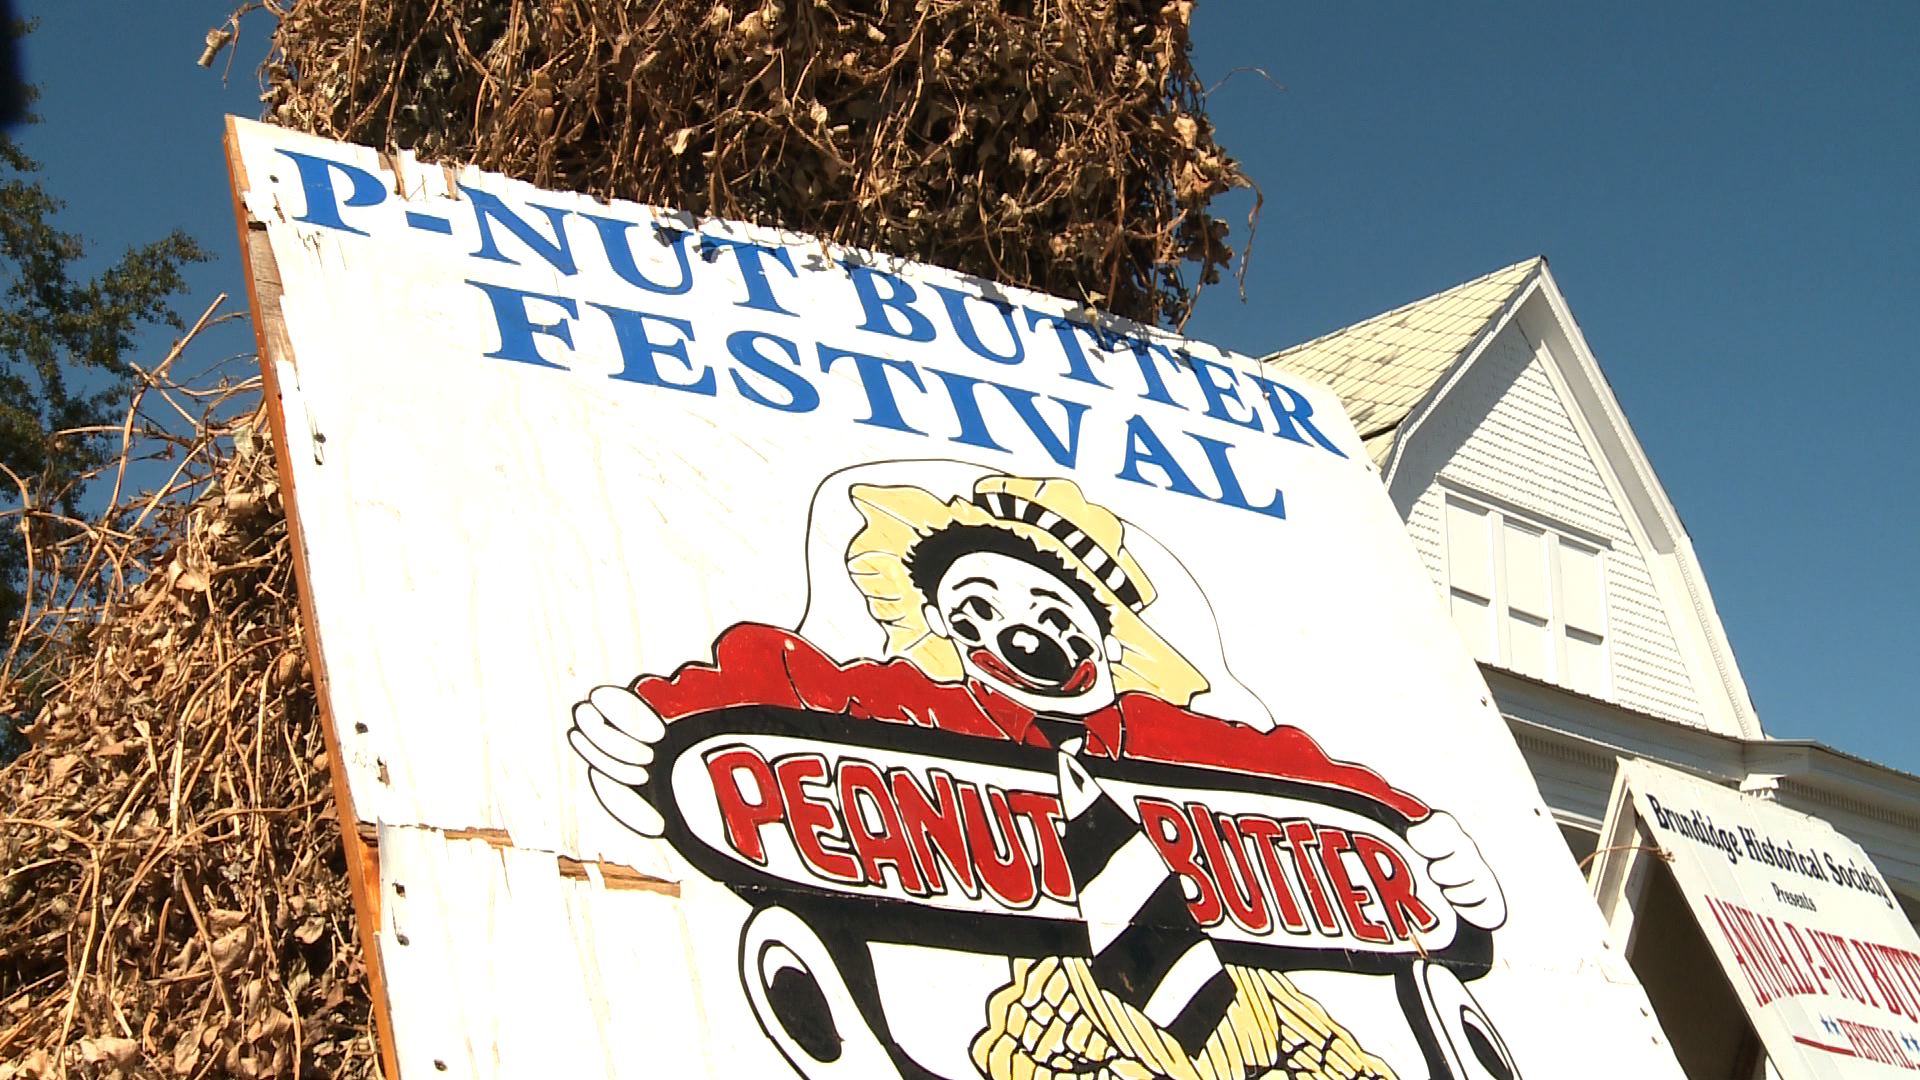 City of Brundidge Hosts 25th Annual Peanut Butter Festival Alabama News